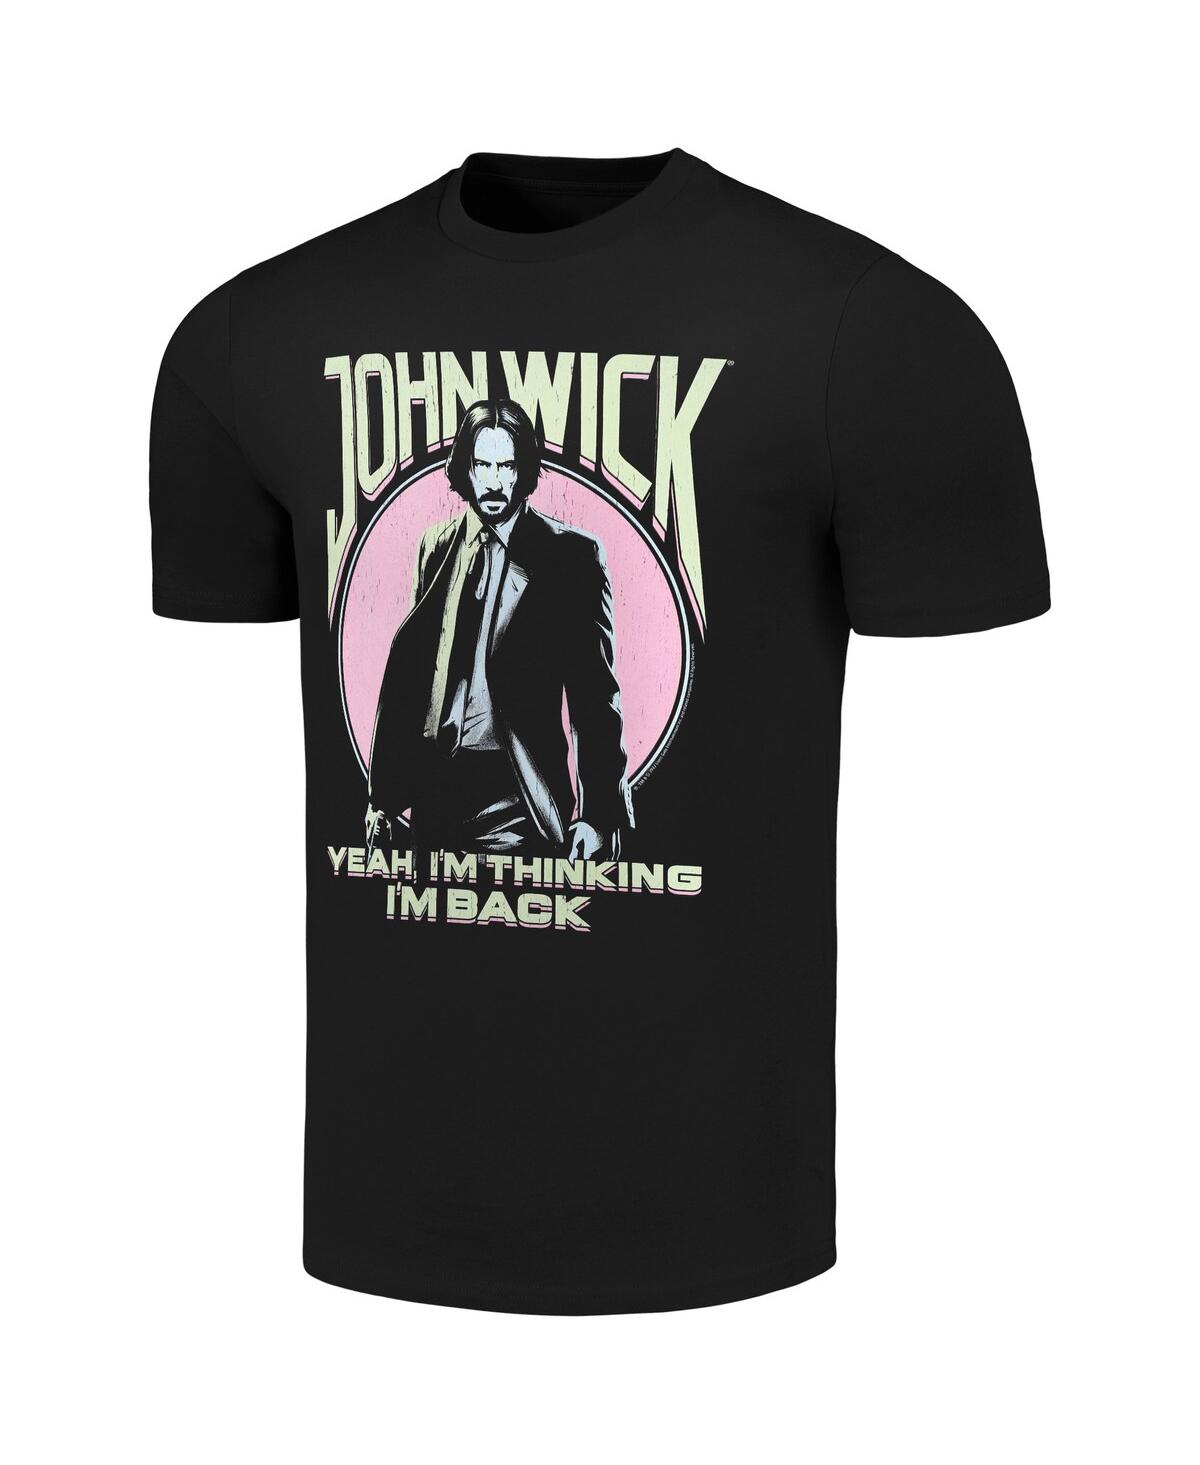 Shop American Classics Men's Black John Wick Graphic T-shirt